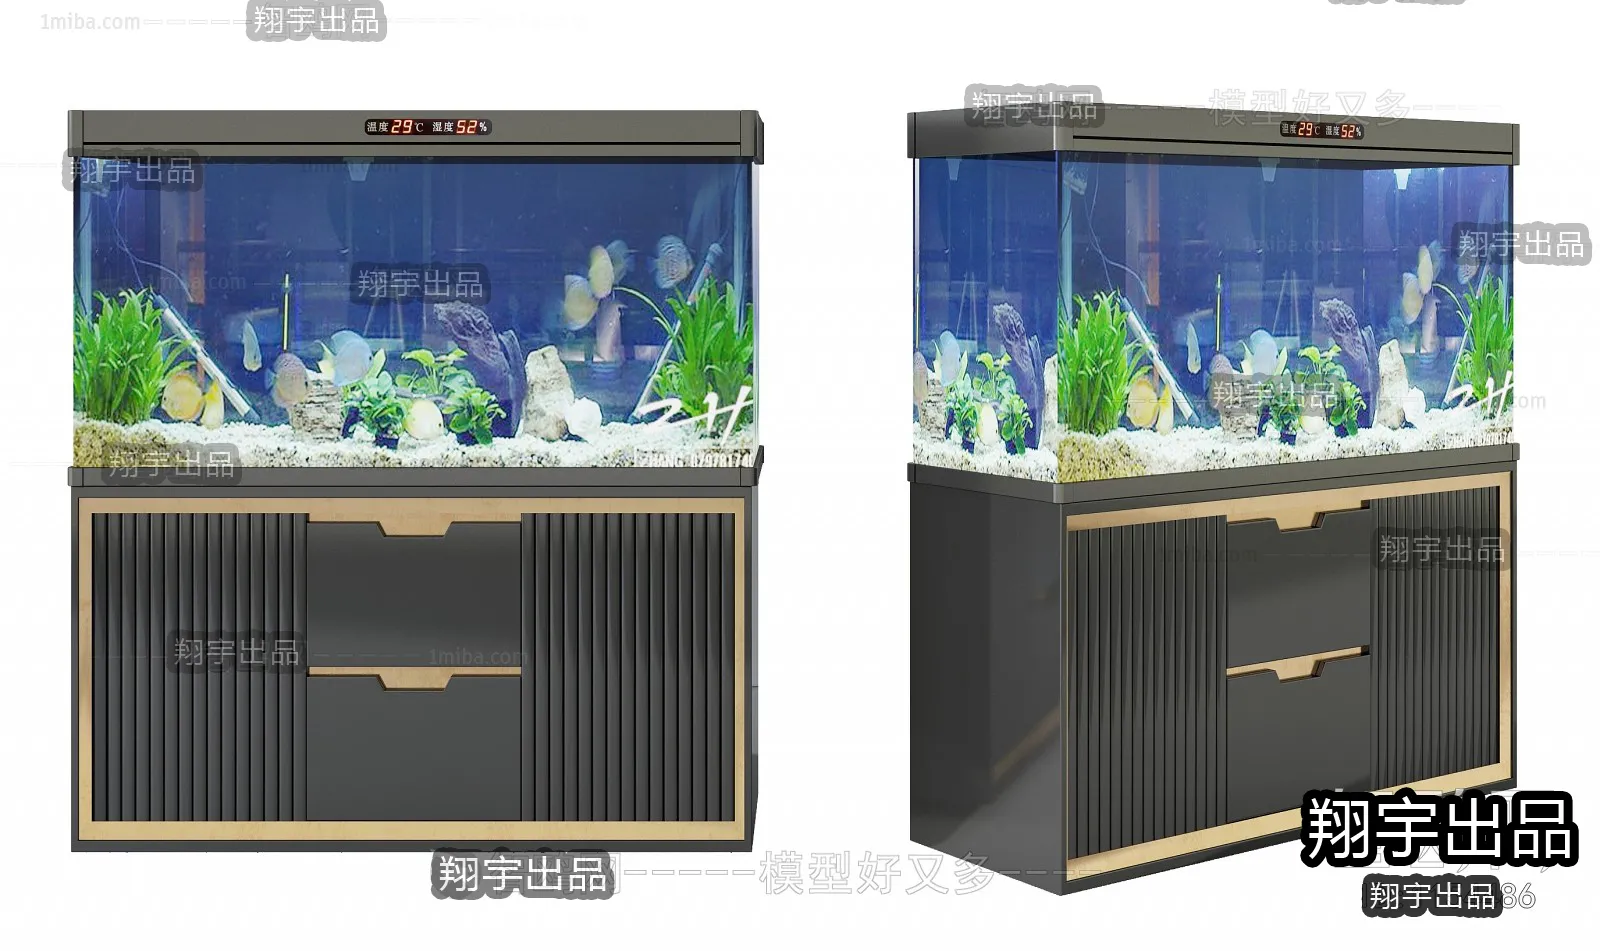 FISH TANK – 1 – FURNITURE 3D MODELS 2022 (VRAY)